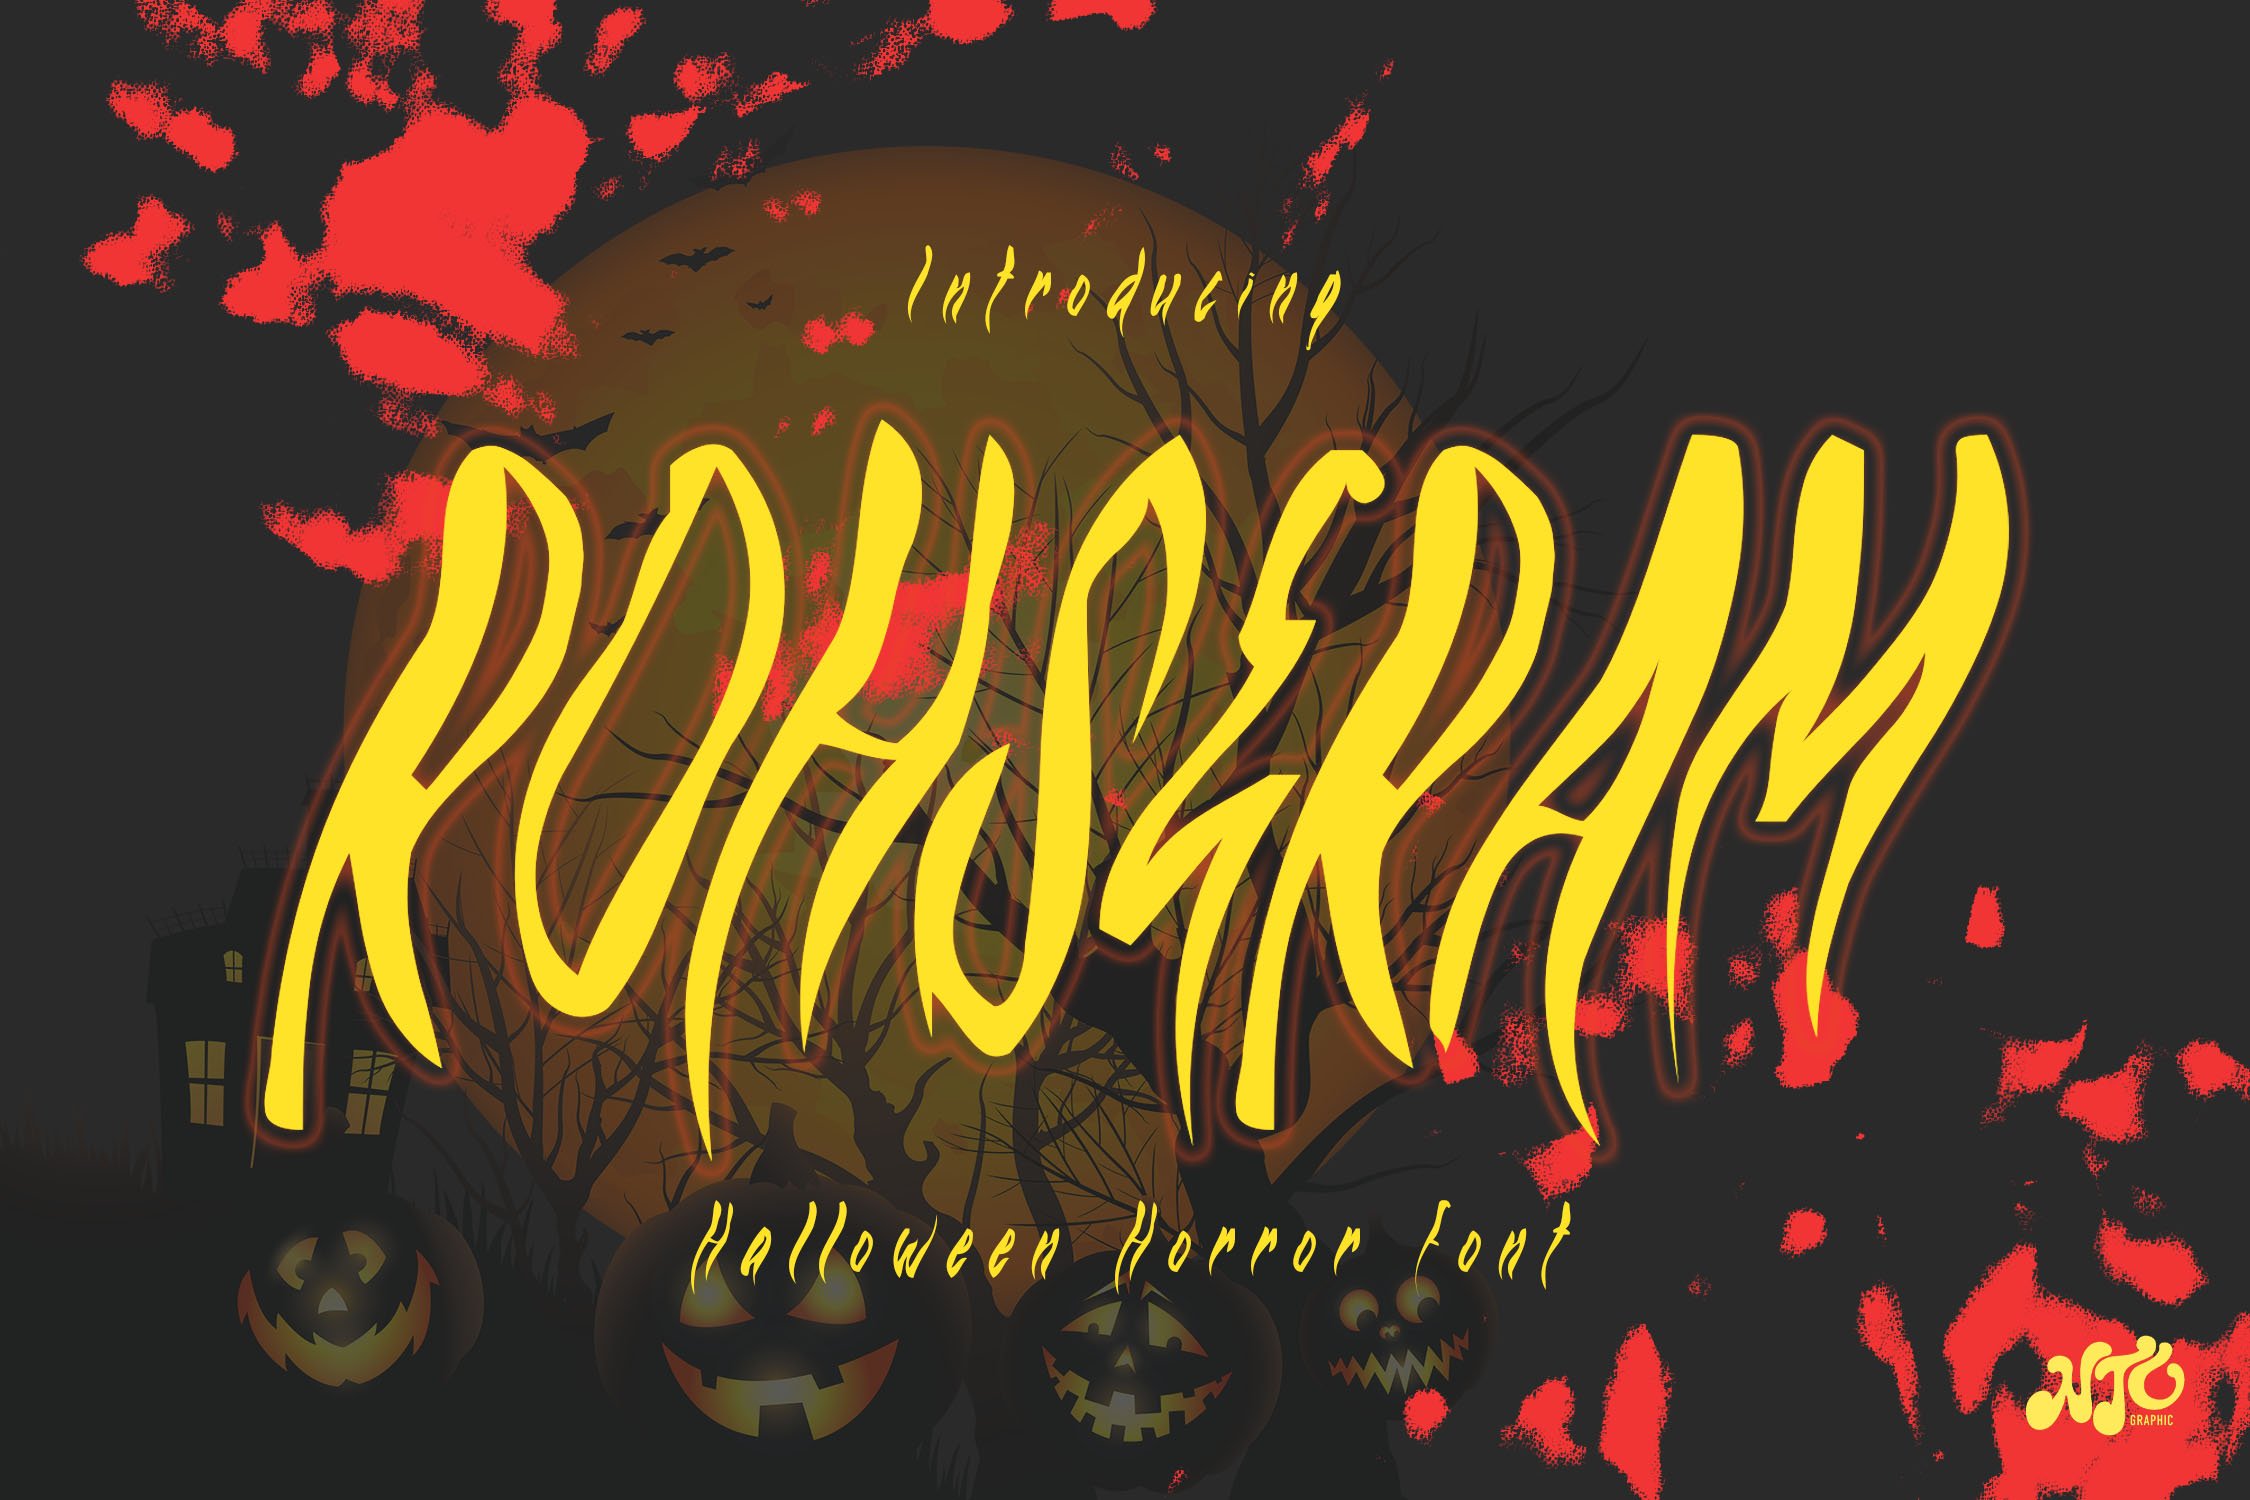 ROHSERAM - Halloween Horror Font cover image.